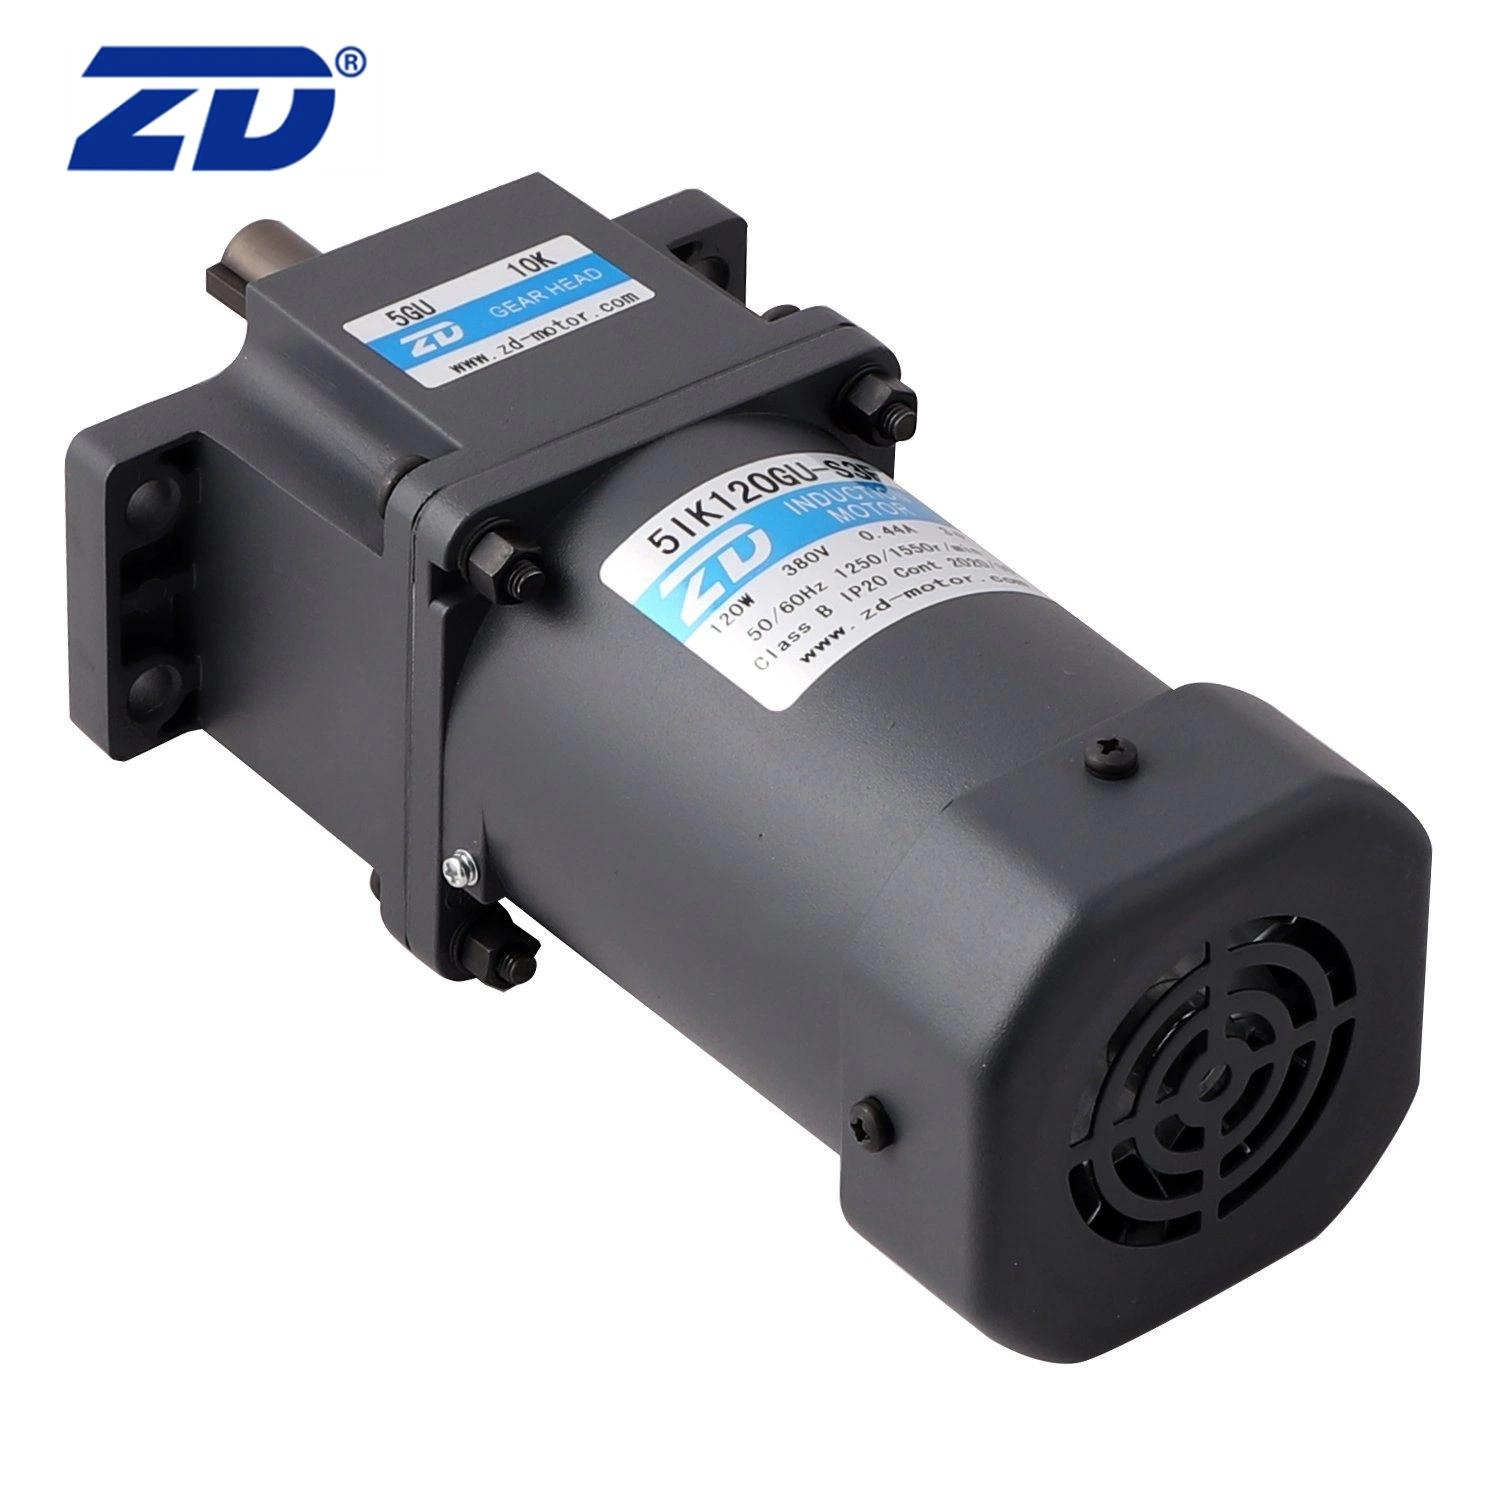 ZD Brake / Fan Connection Box 1250, 1300, 2750, 2800rpm Gear Reduction Electric AC Motor